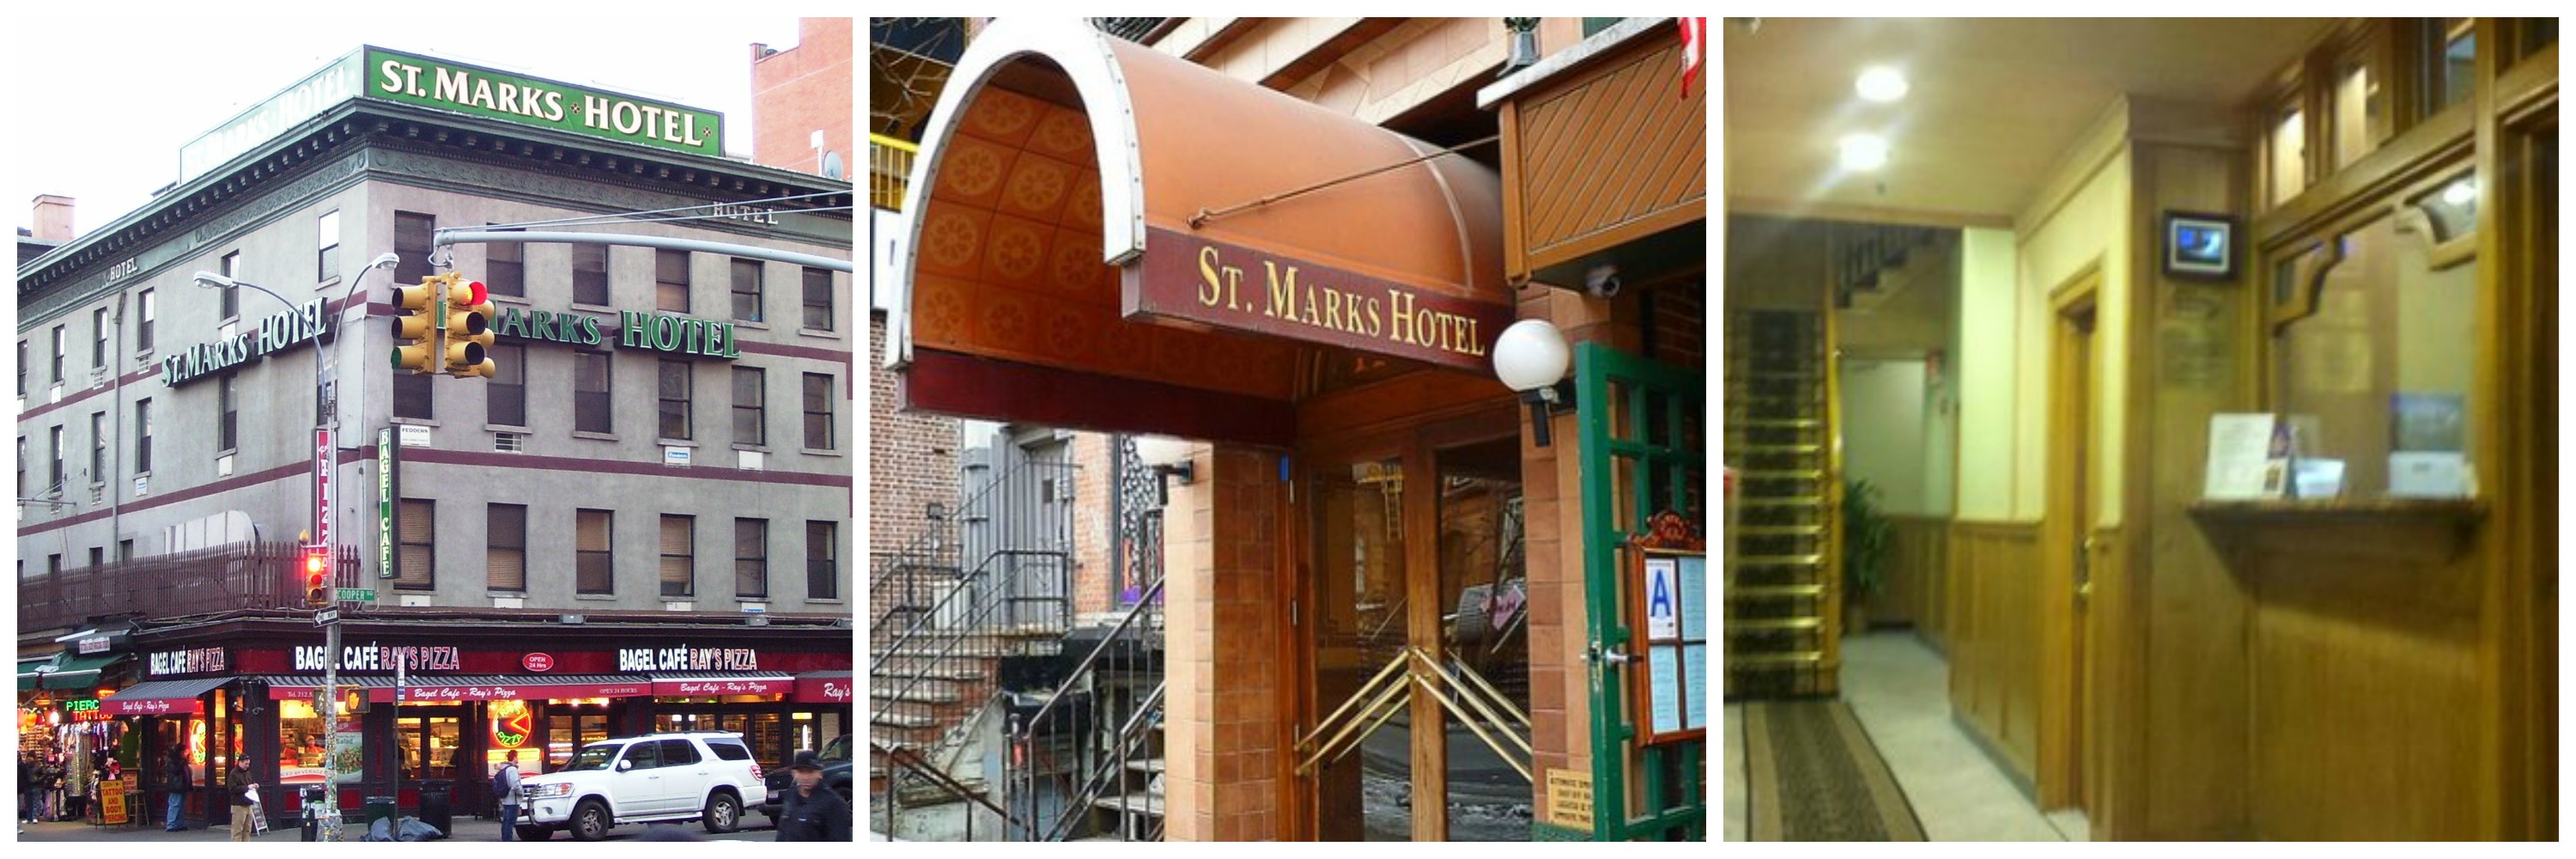 St. Marks Hotel | Hotel anmeldelse